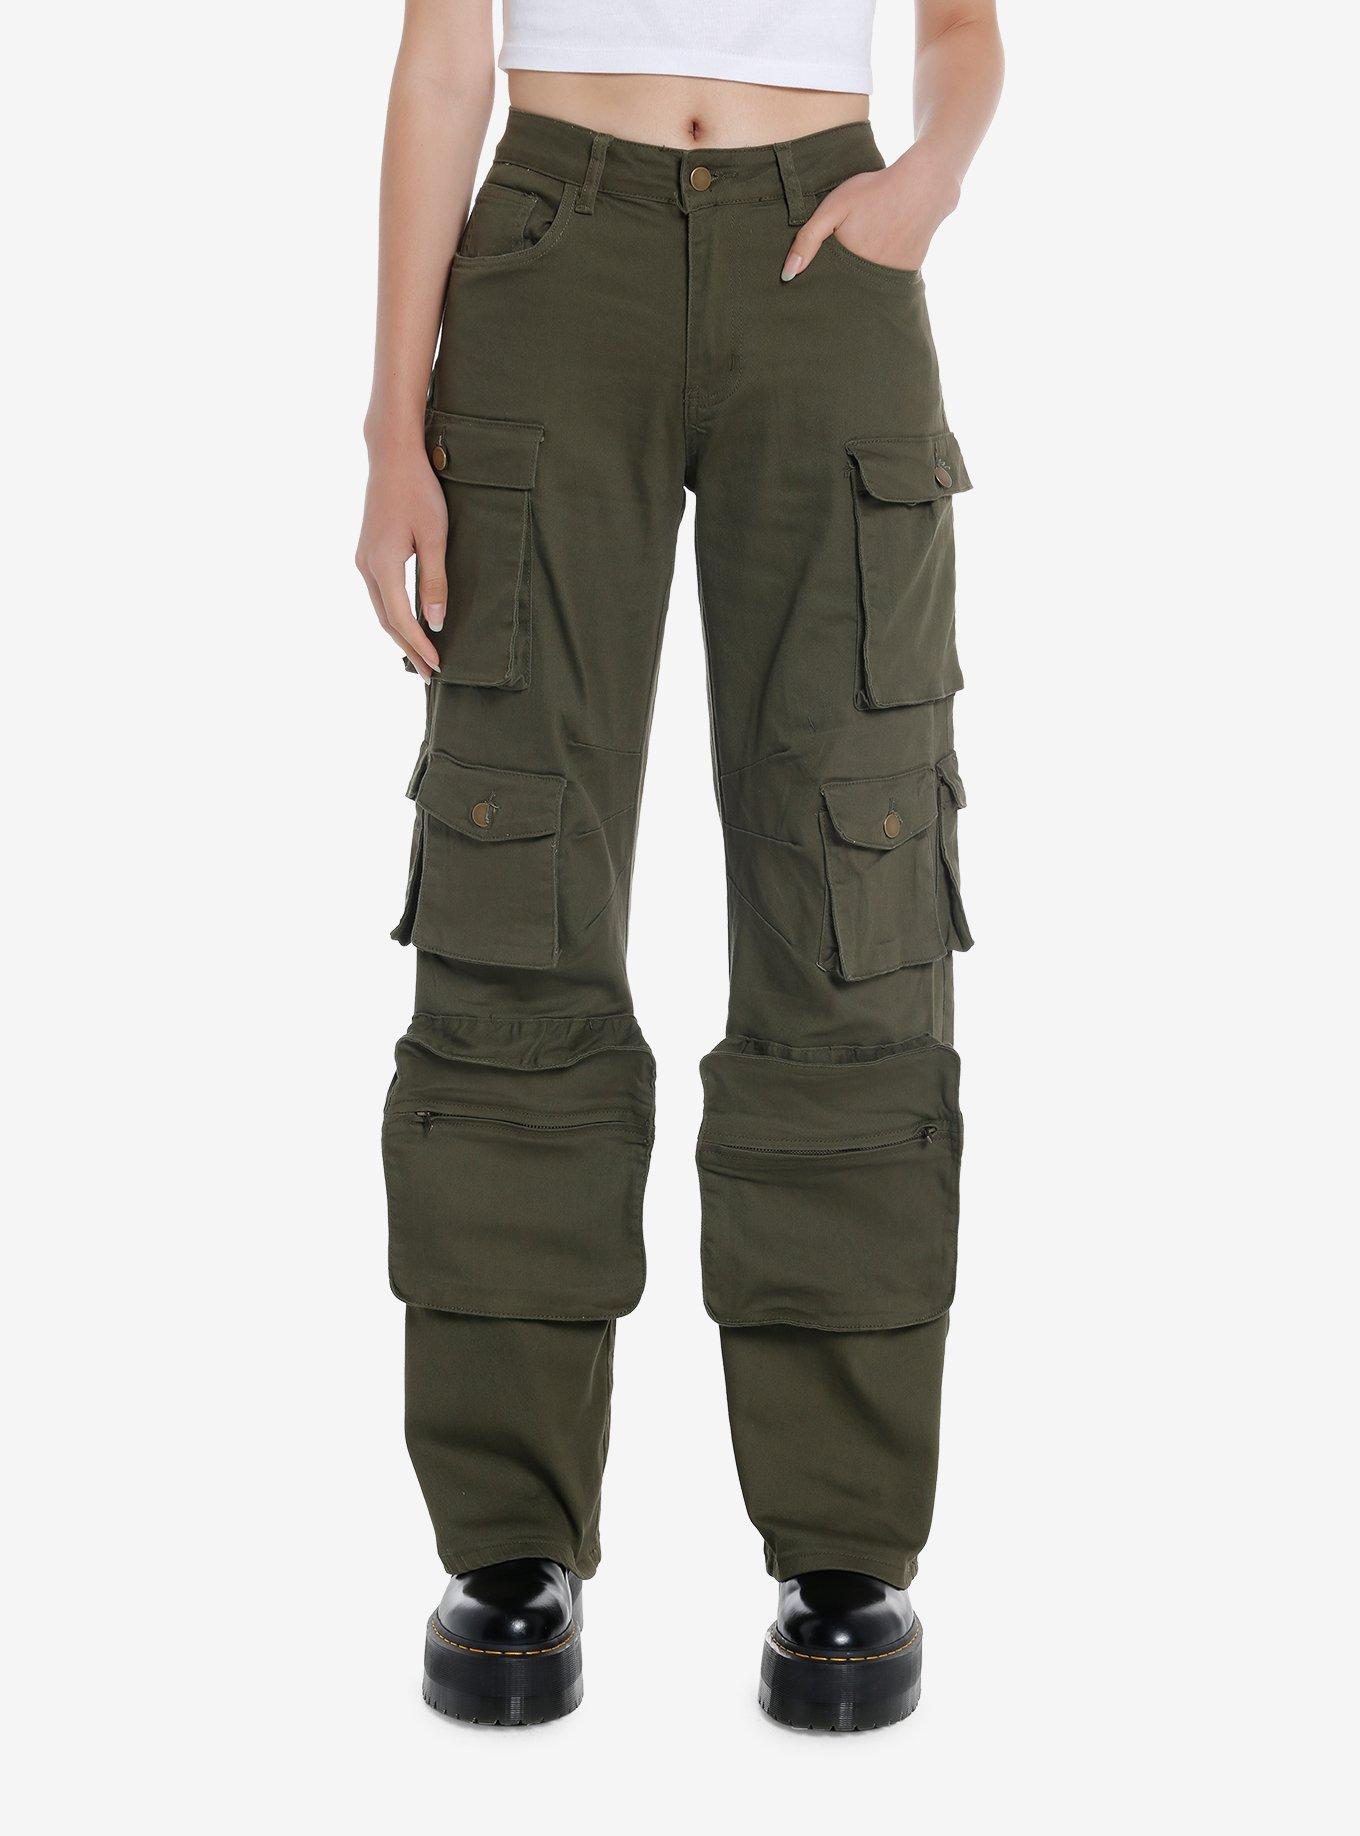 Olive Green Multi-Pocket Girls Cargo Pants | Hot Topic